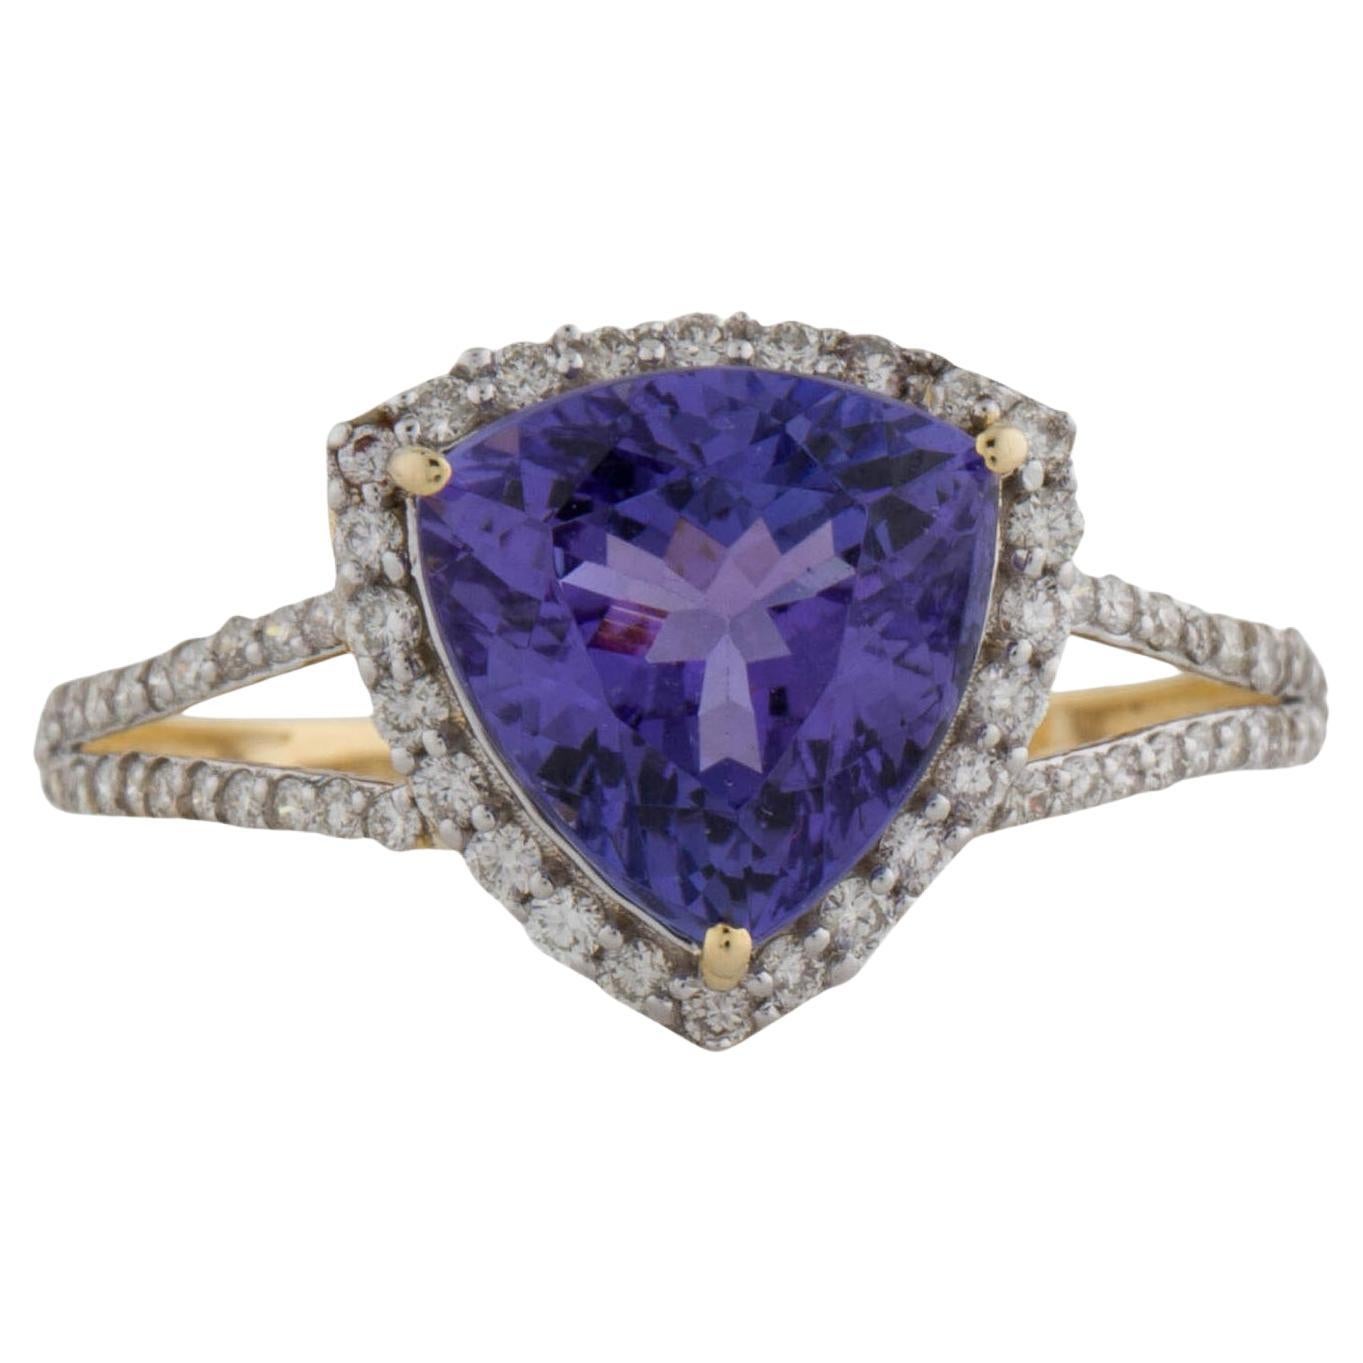 Luxurious 14K Tanzanite & Diamond Cocktail Ring, Size 7.25 - Statement Jewelry